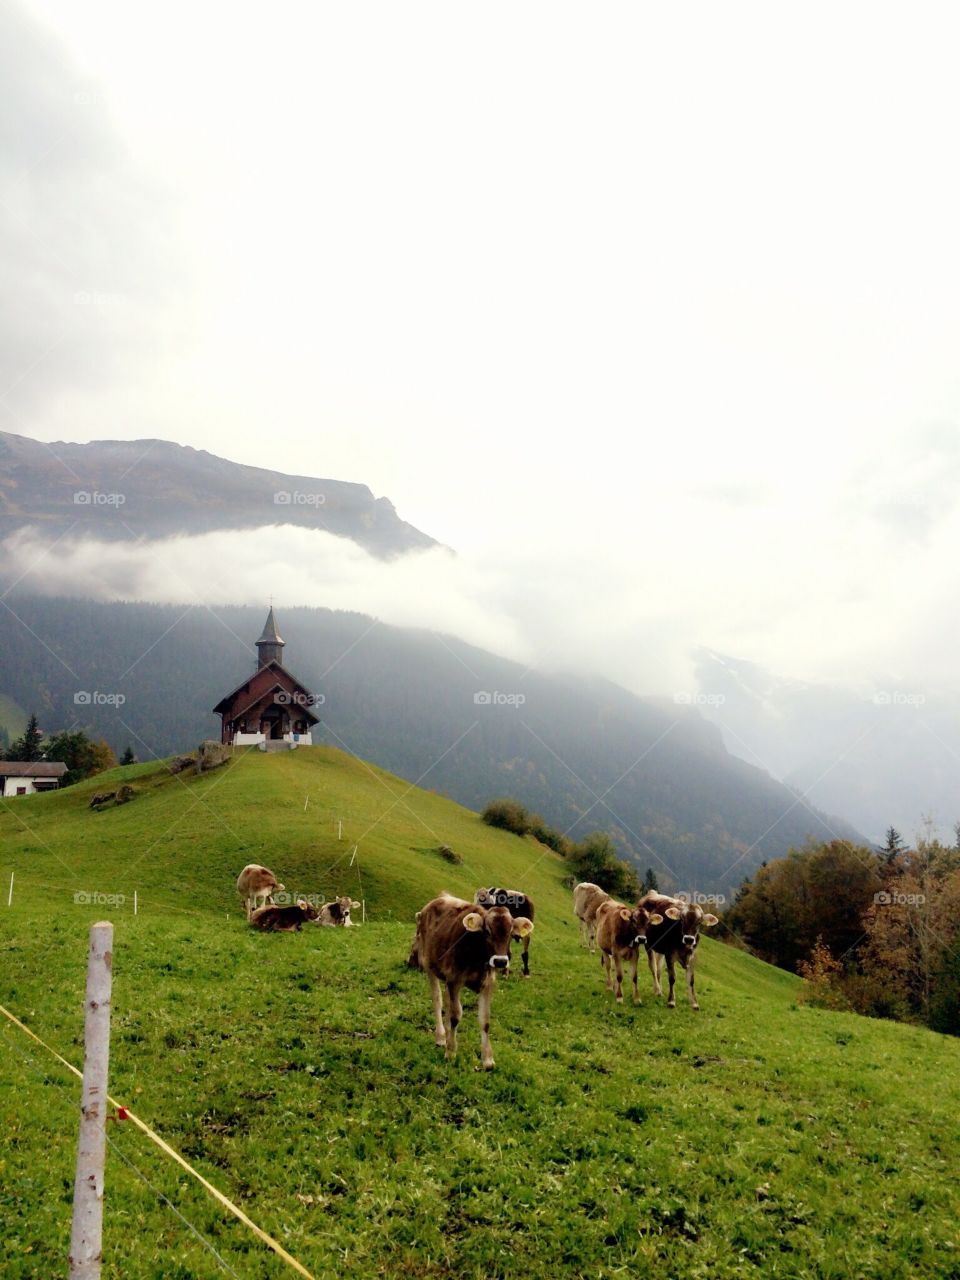 Up in the Alps 🇨🇭
Haldi Swiss